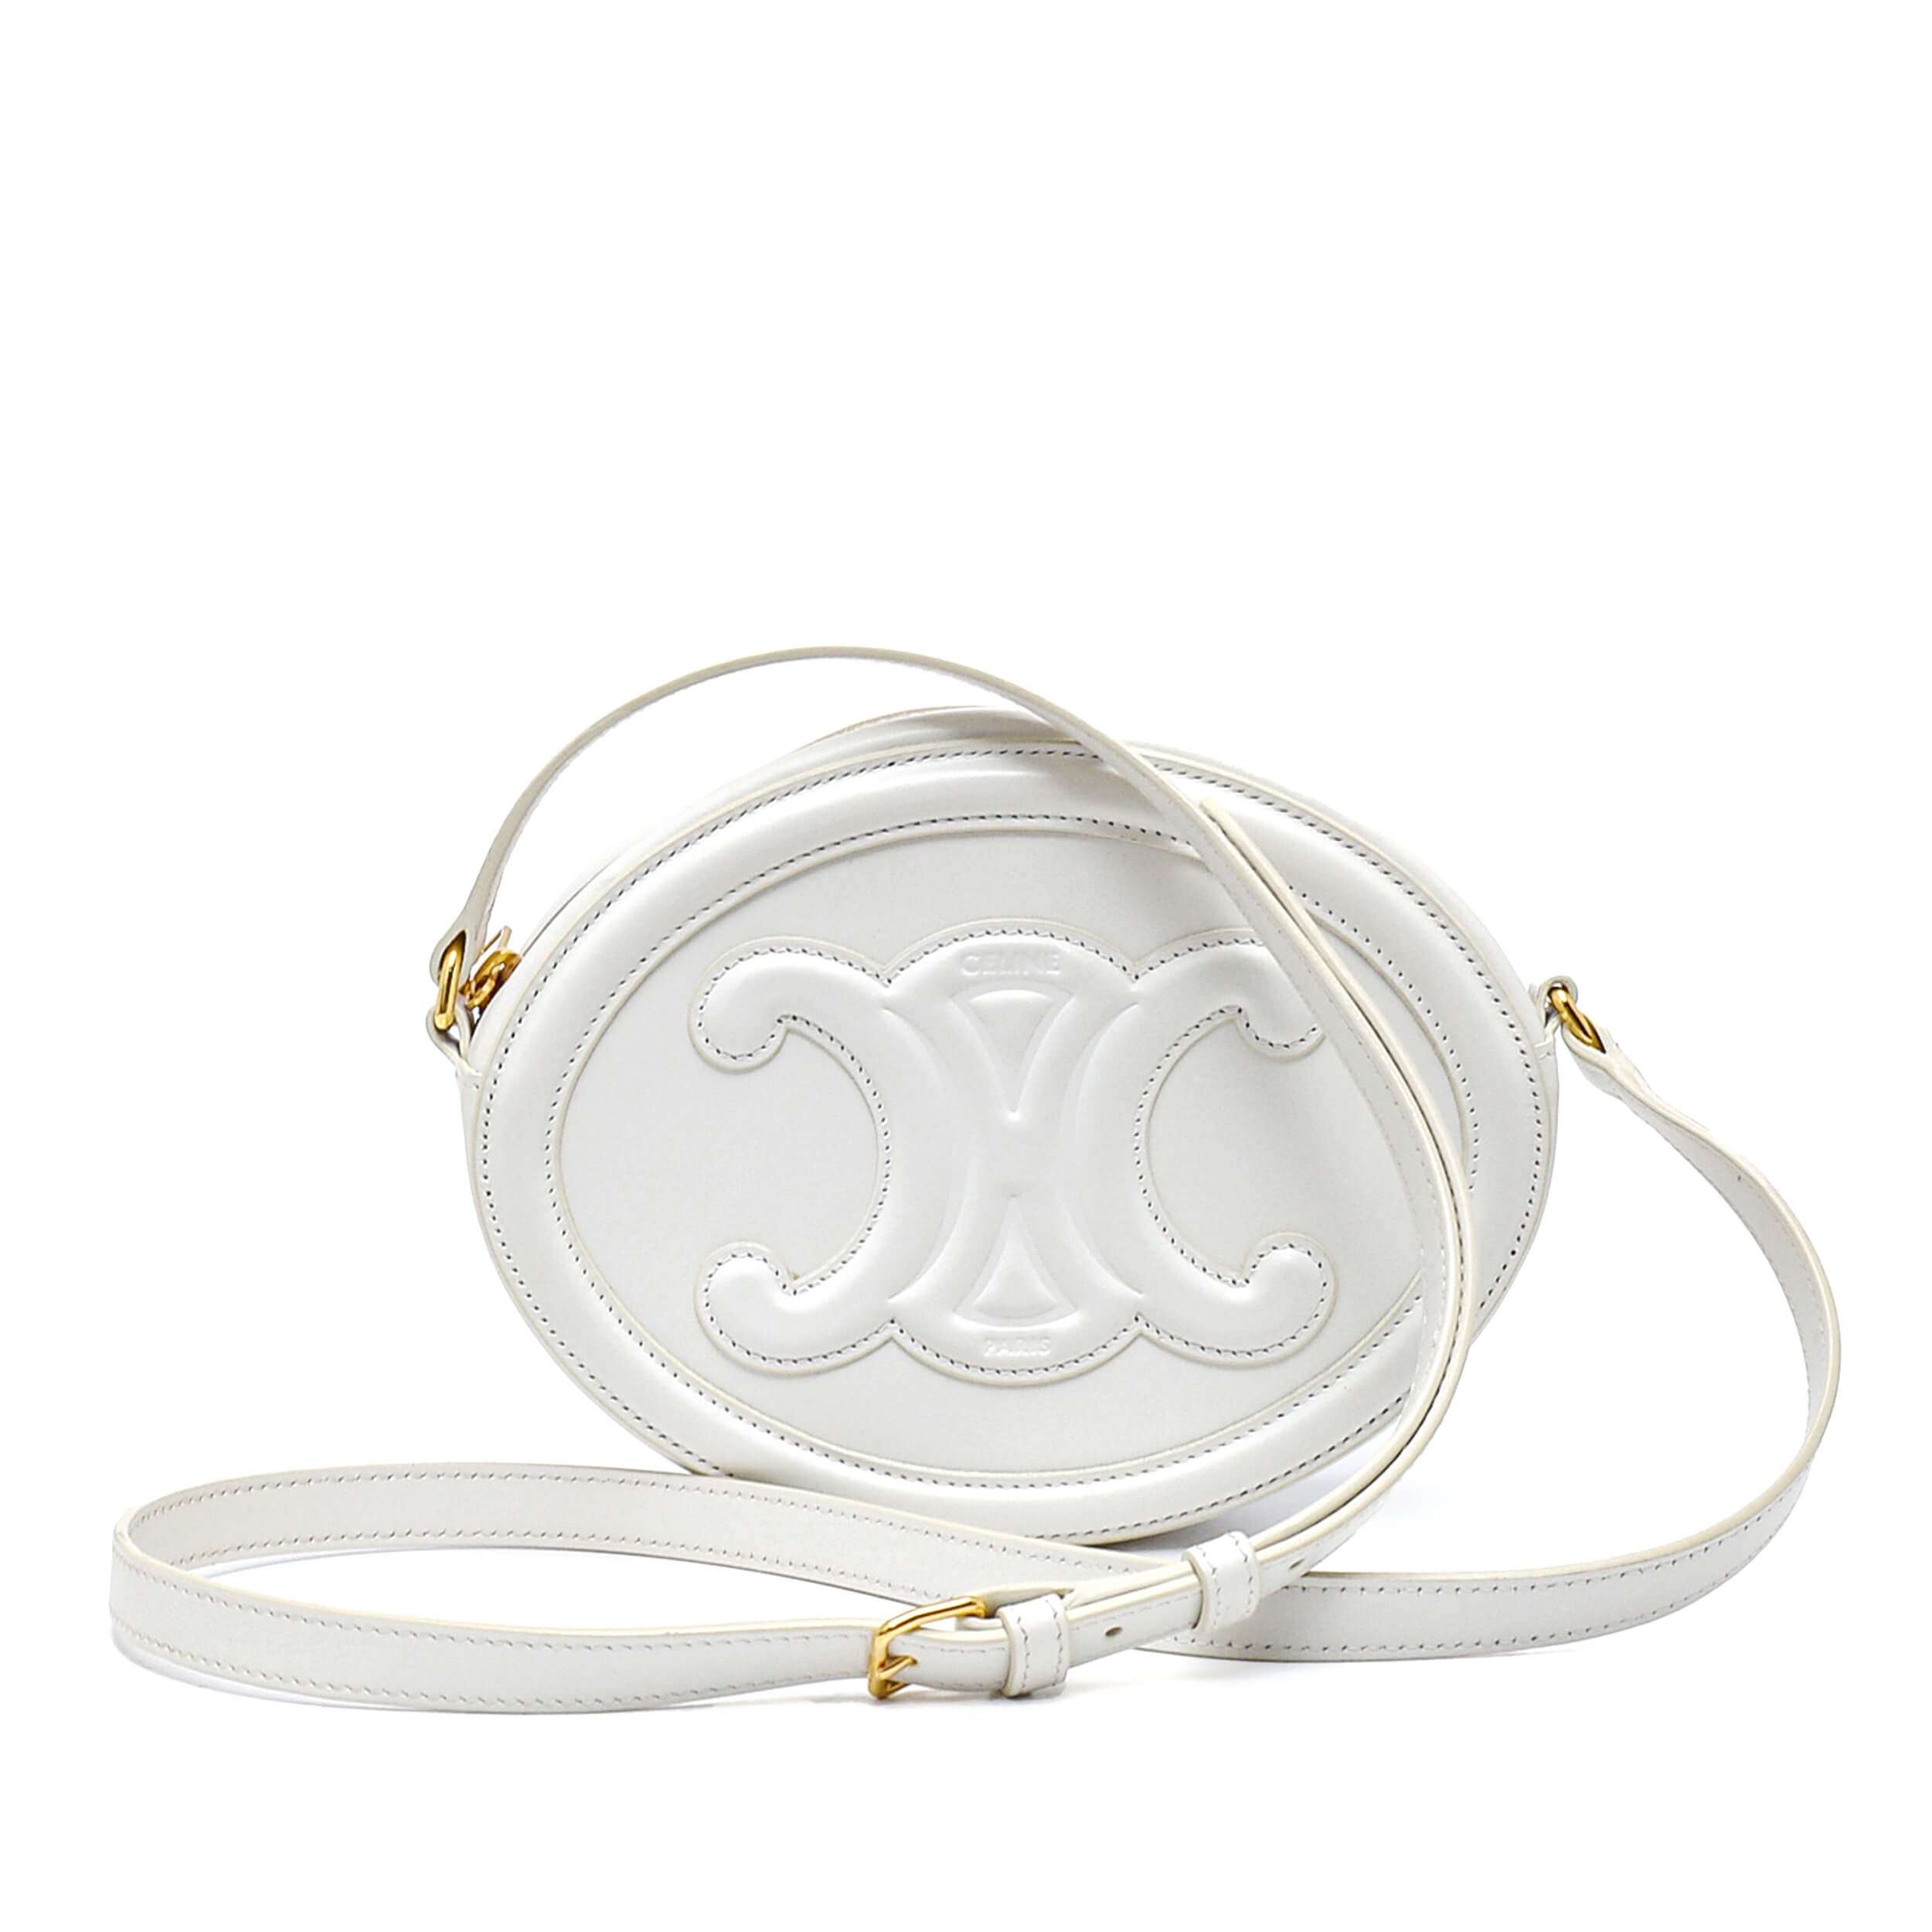 Celine - White Leather Oval Purse Crossbody Bag